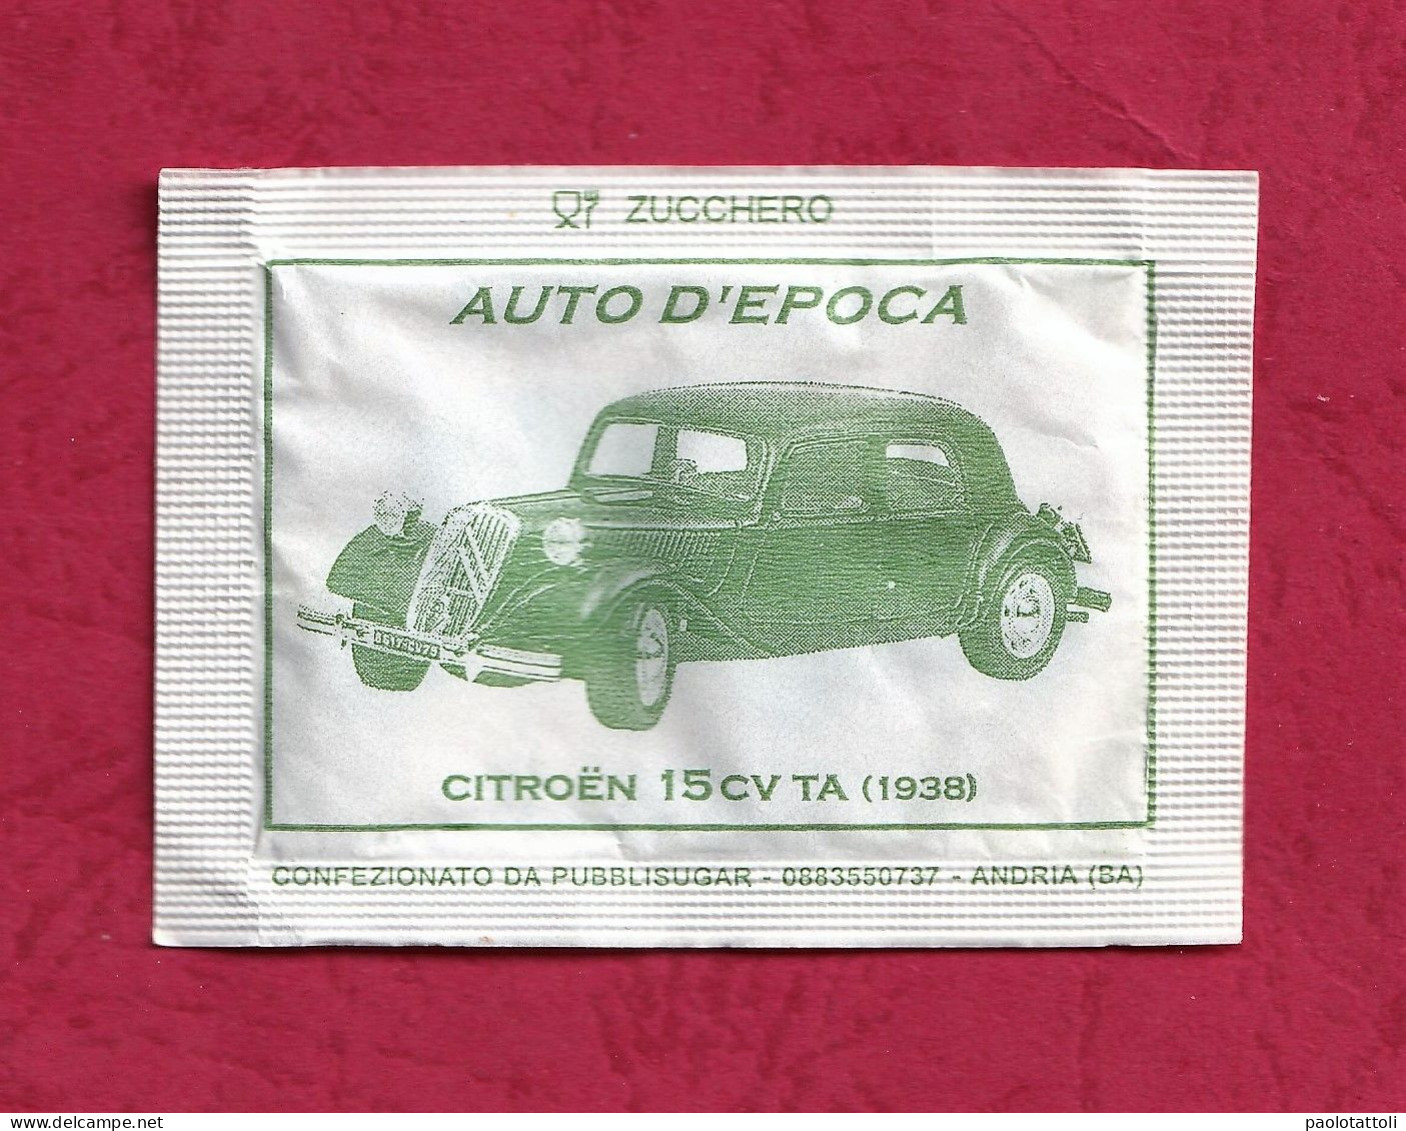 Bustina Vuota Zucchero. Empty Sugar Bag- Cars. Auto D'epoca, Citroen 15 Cv TA-1938. Packed By Pubblisugar, Andria. BA. - Zucchero (bustine)